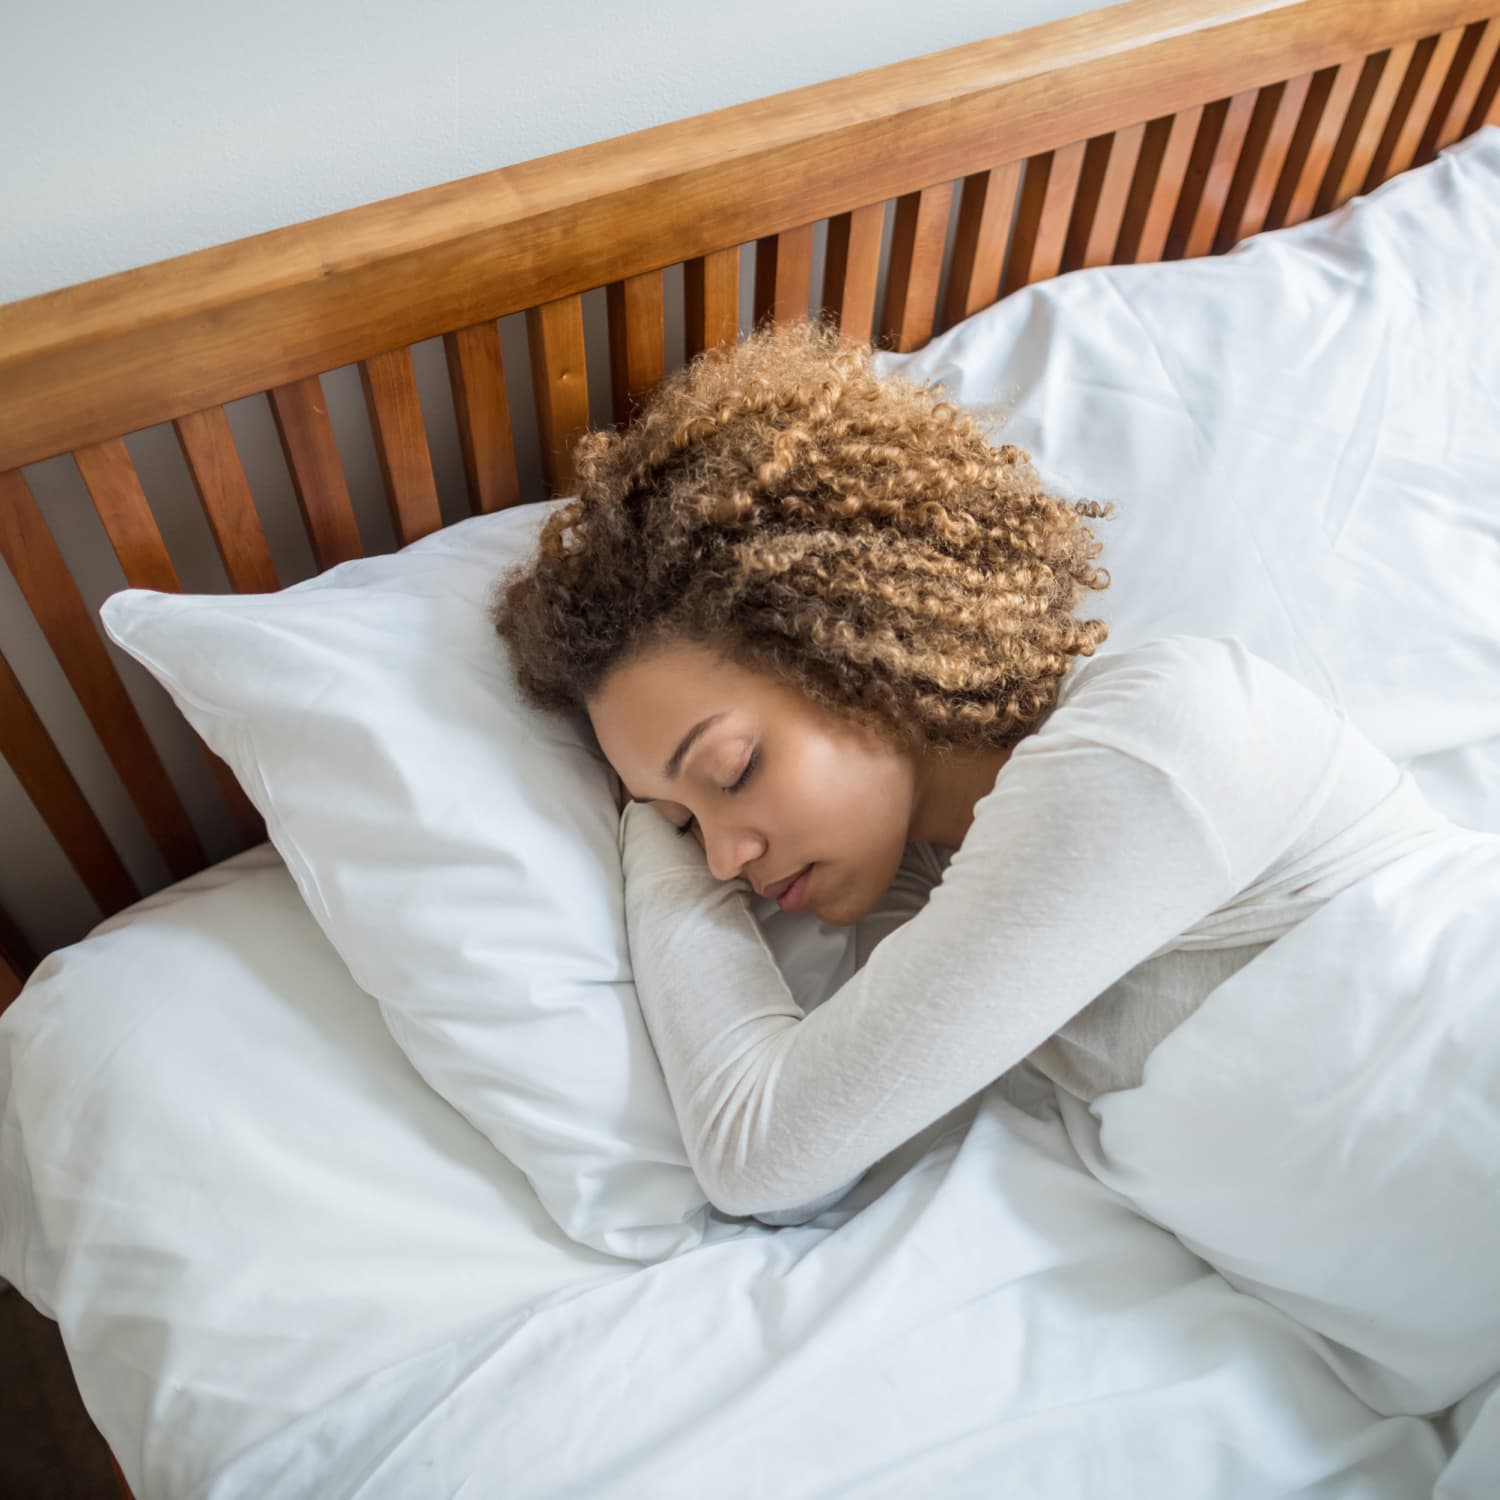 Sleep Study > Fact Sheets > Yale Medicine